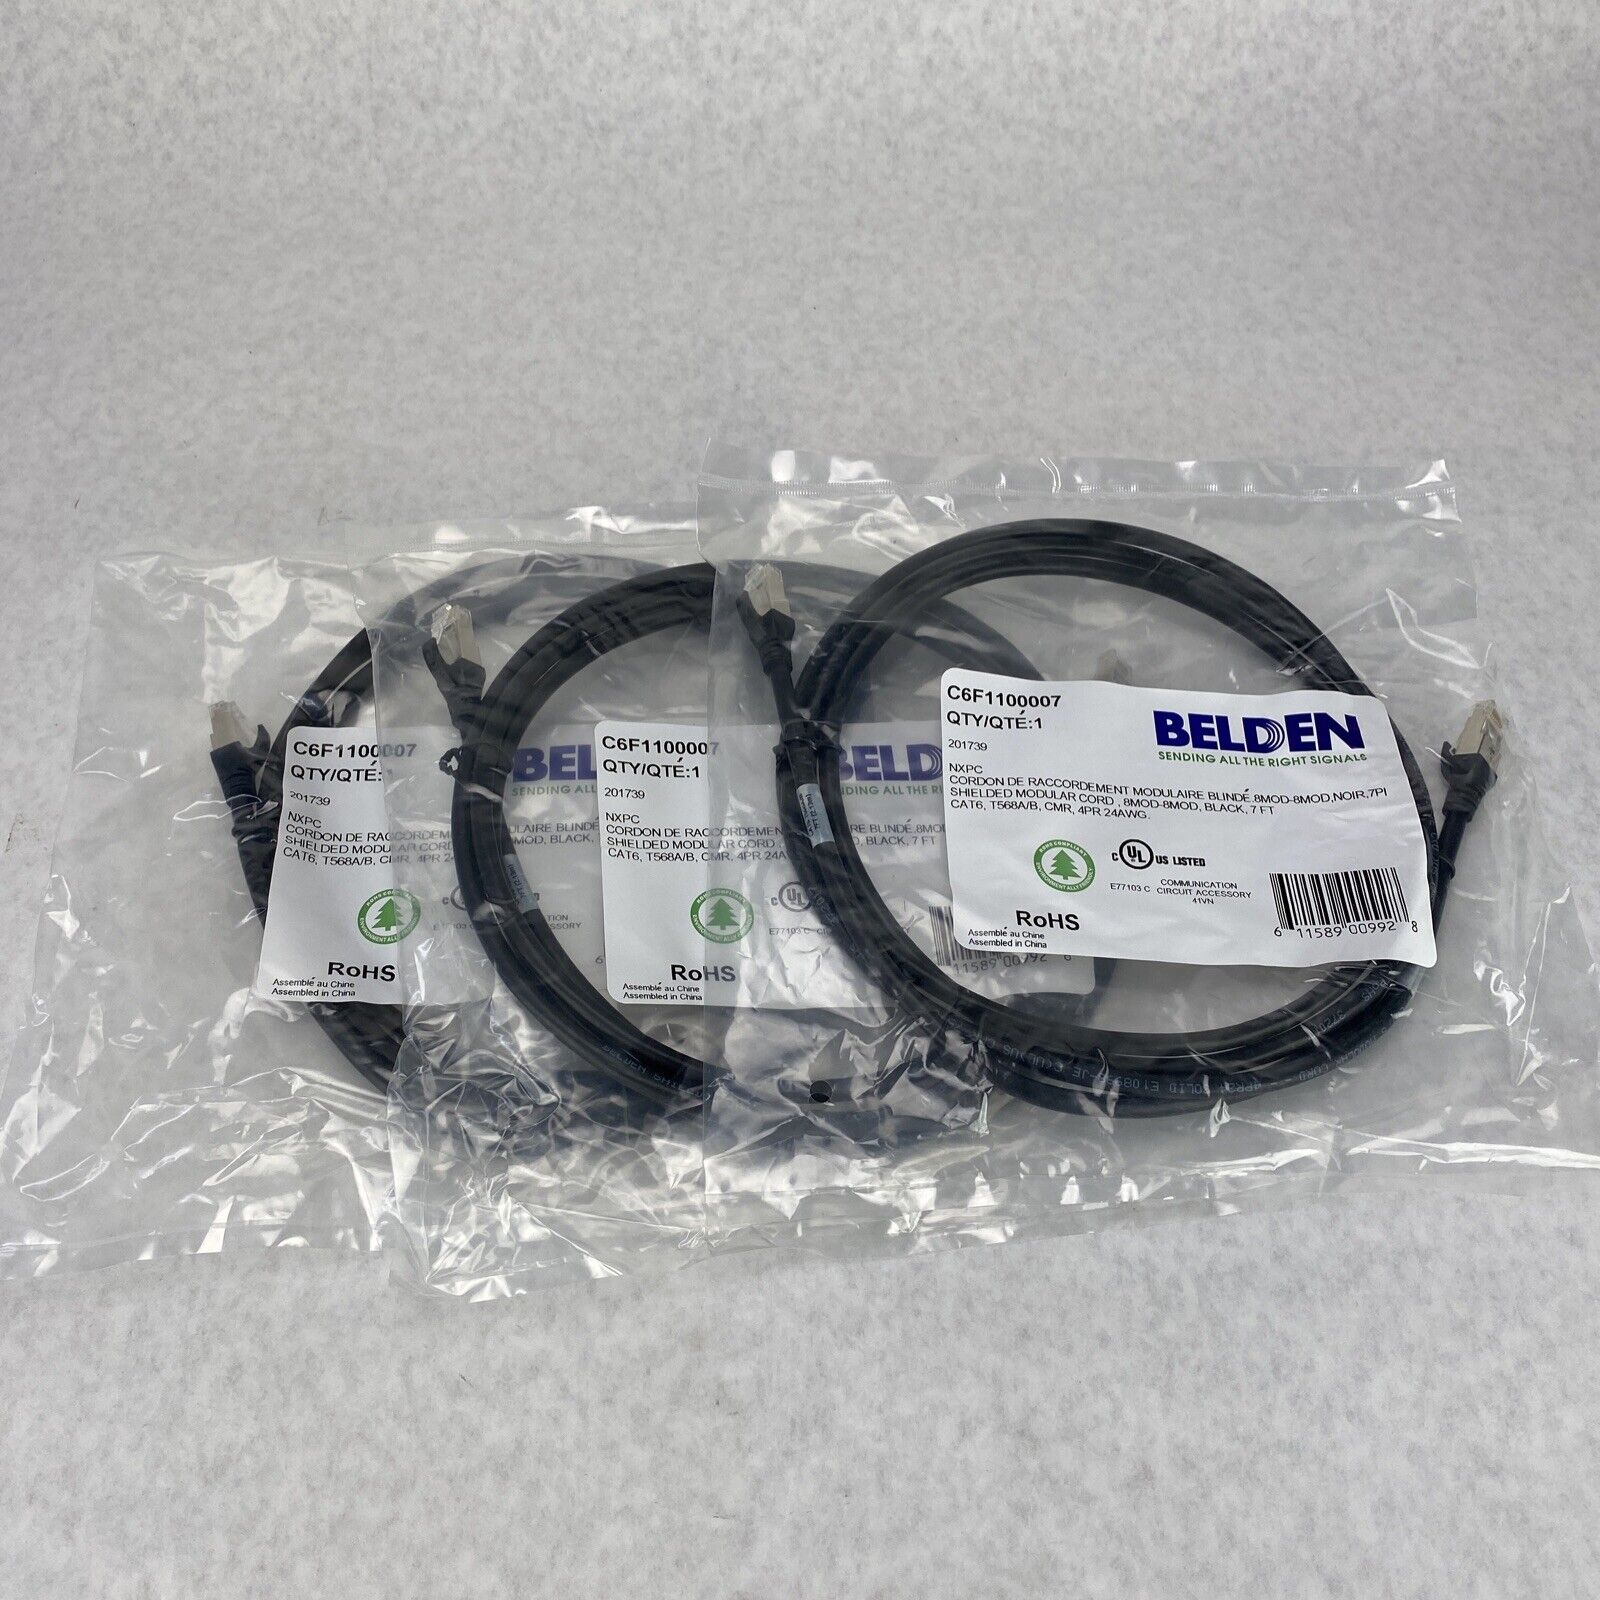 Lot of 3 Belden C6F1100007 Ethernet CAT6 Shielded Modular Cord 7ft Black 201739